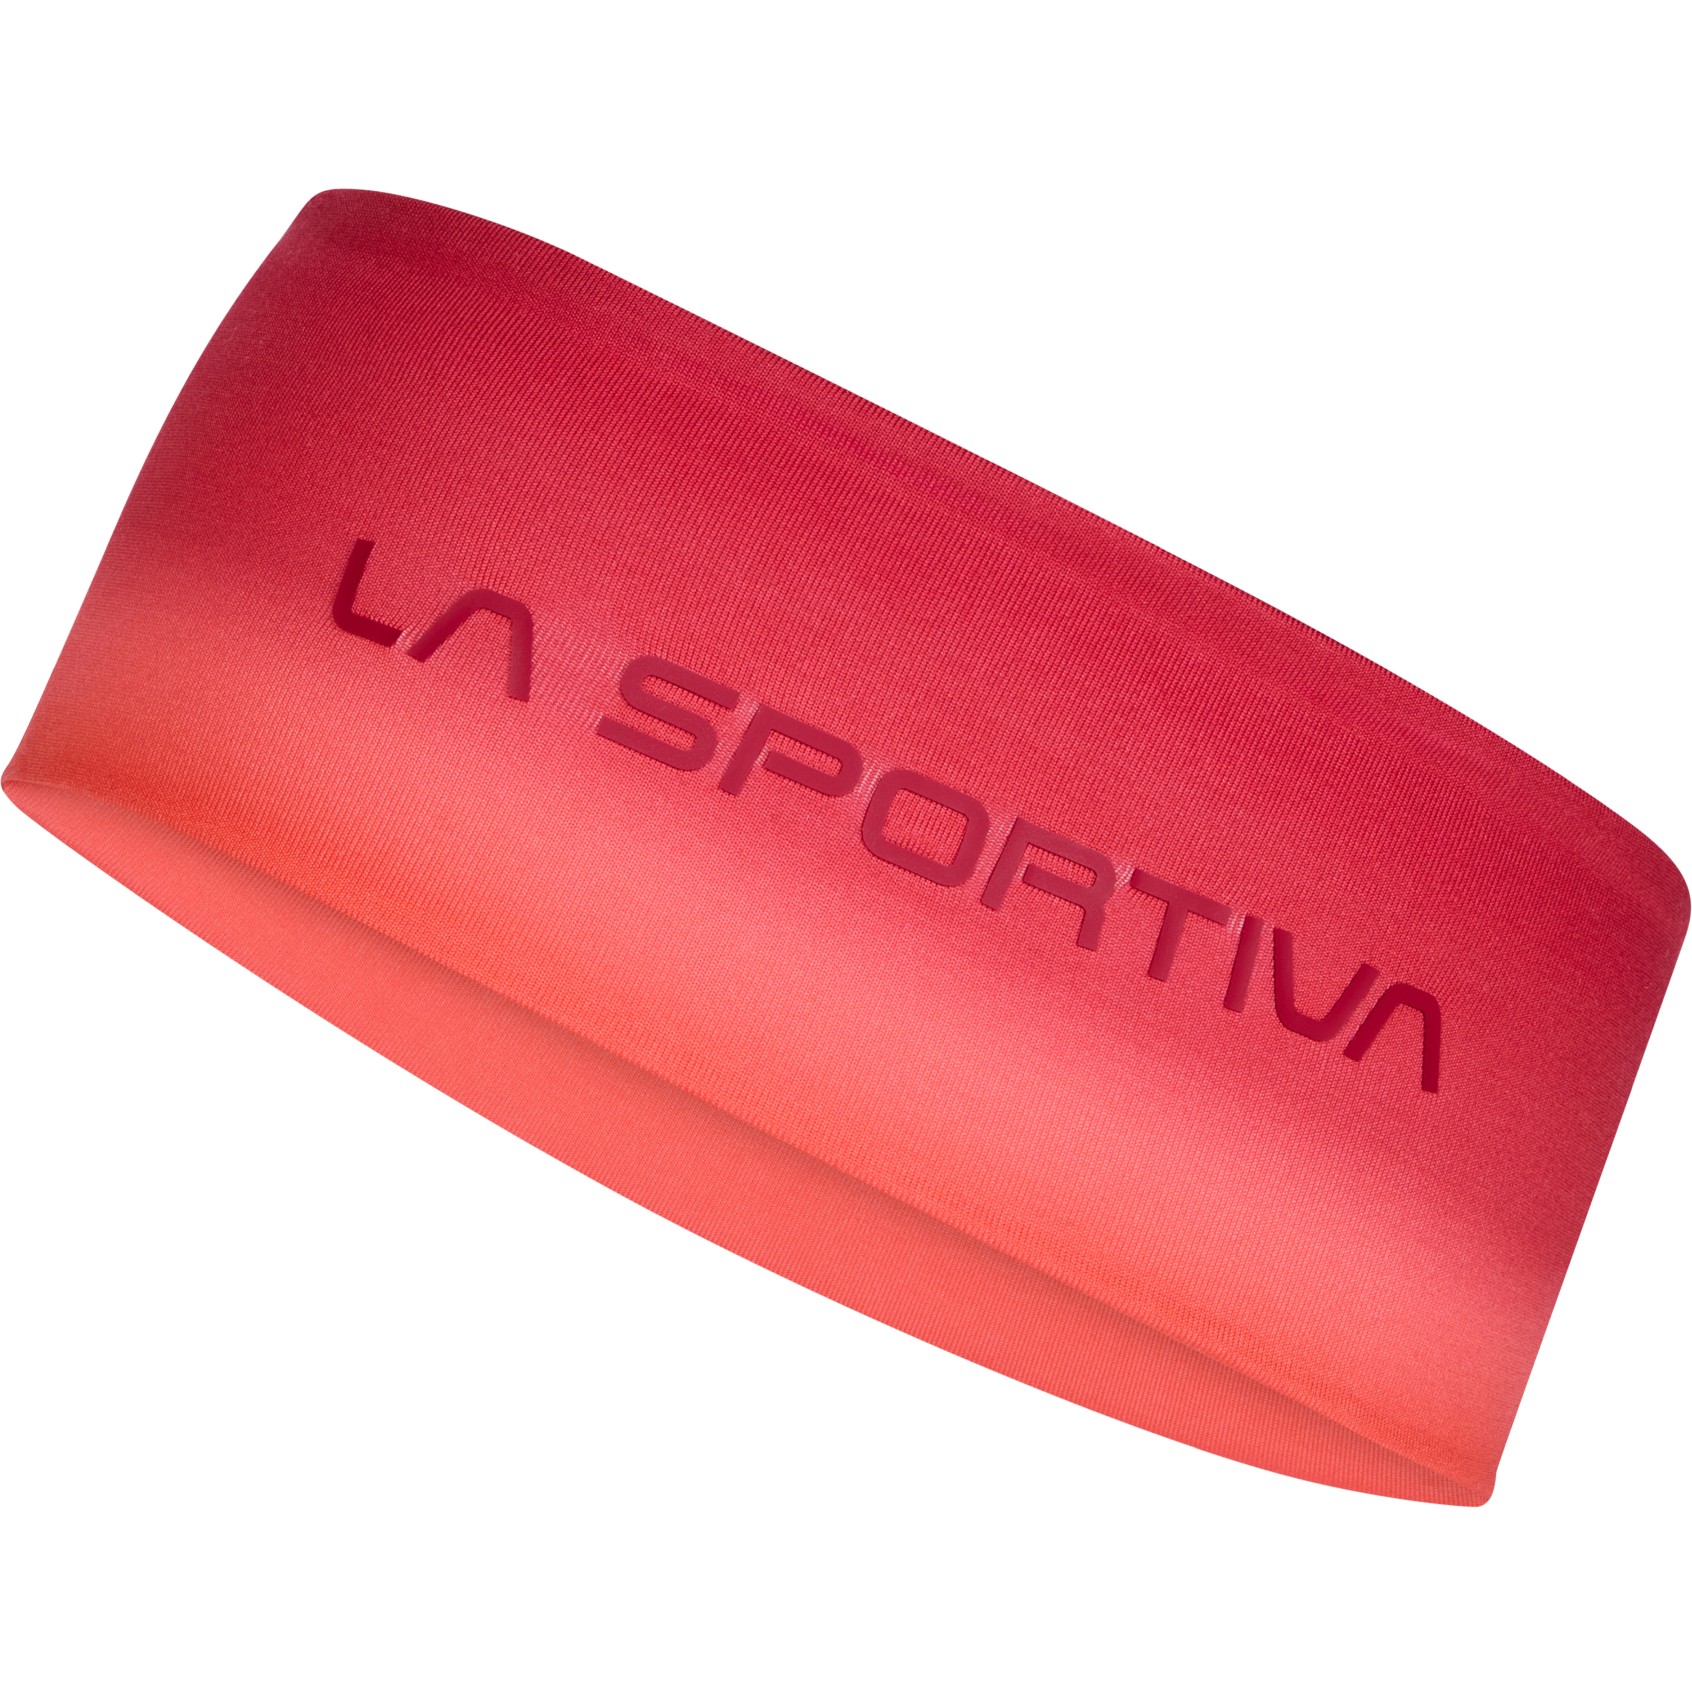 Produktbild von La Sportiva Fade Stirnband - Velvet/Cherry Tomato